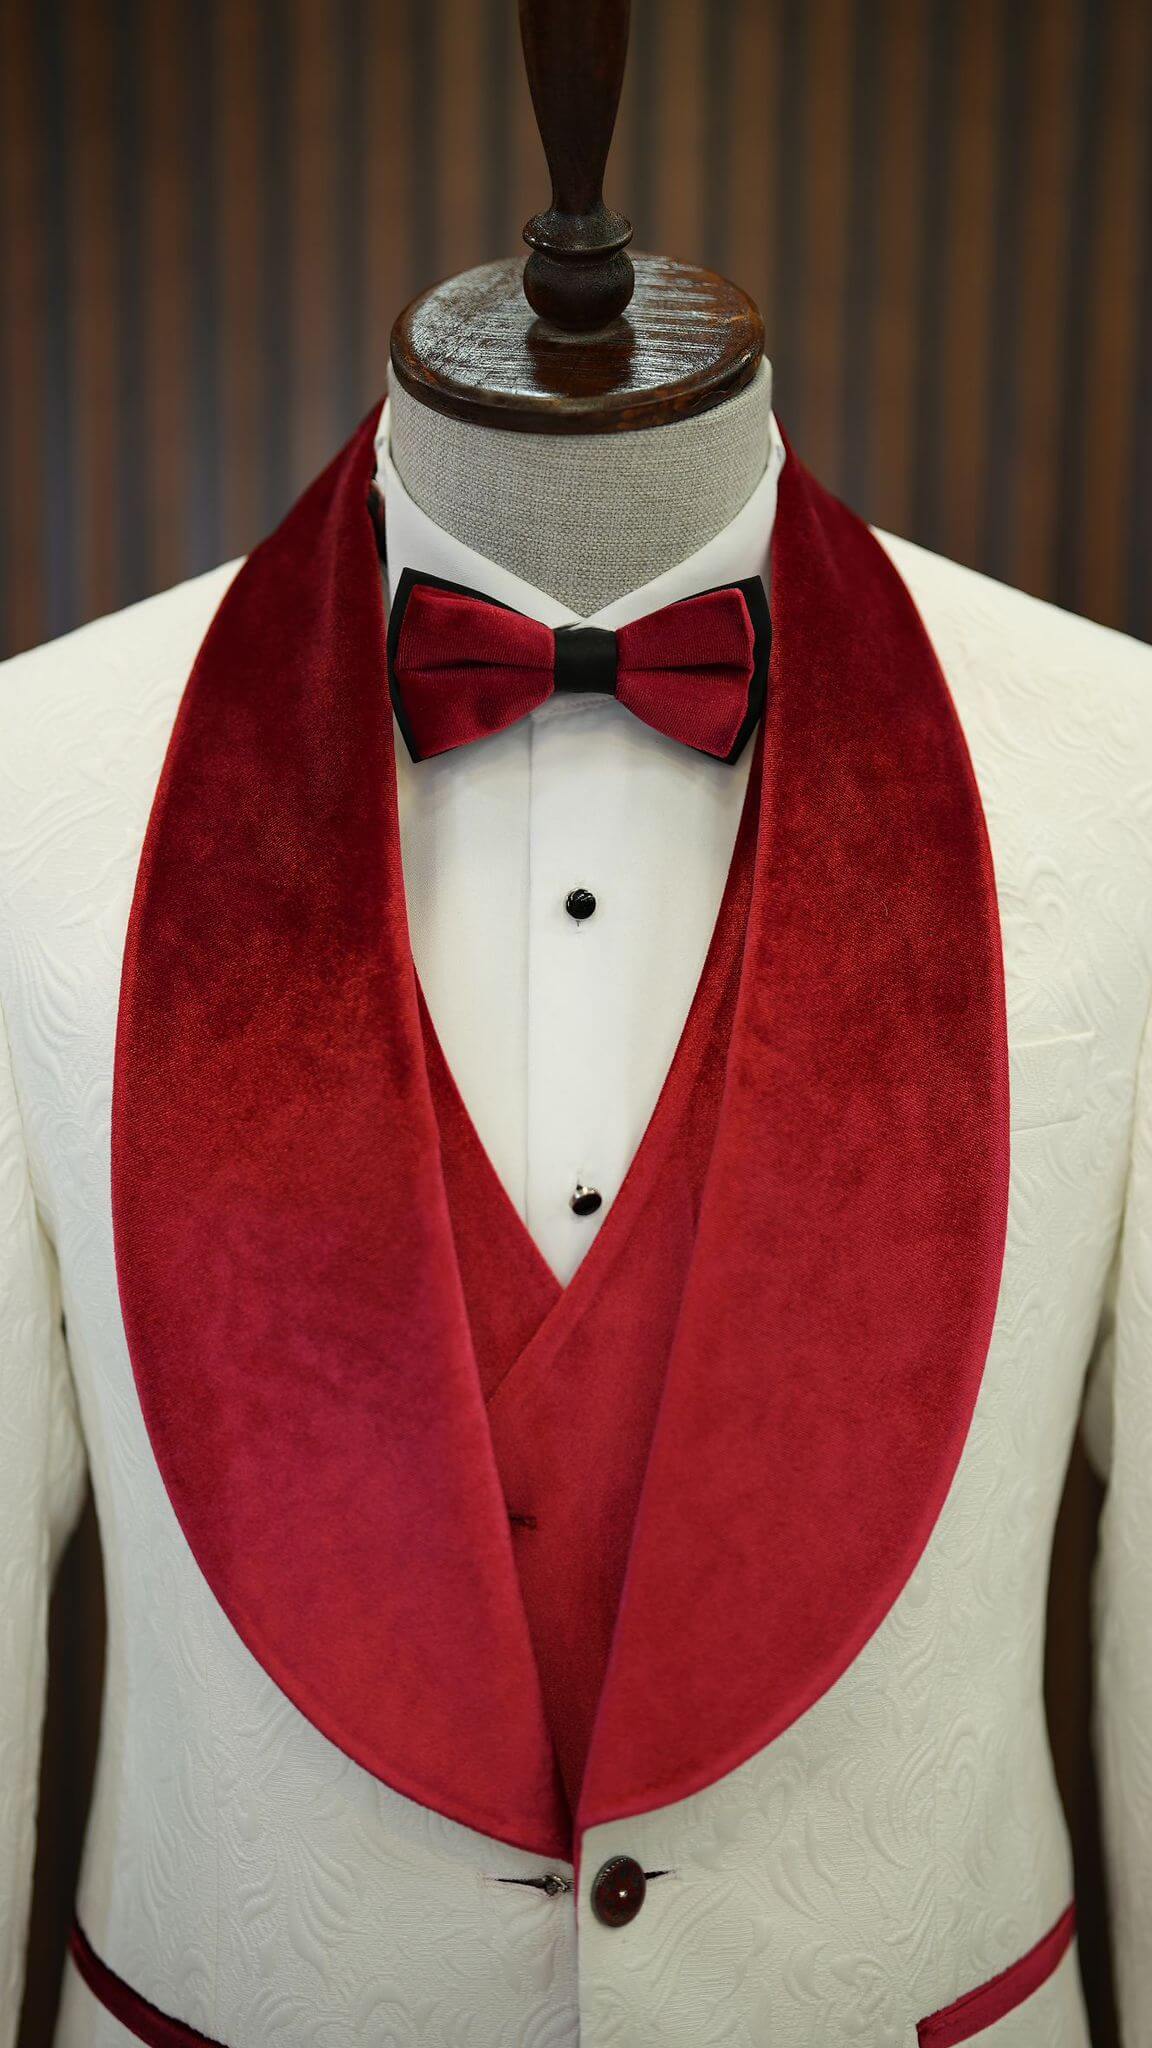 Modest Red & White Tuxedo Suit